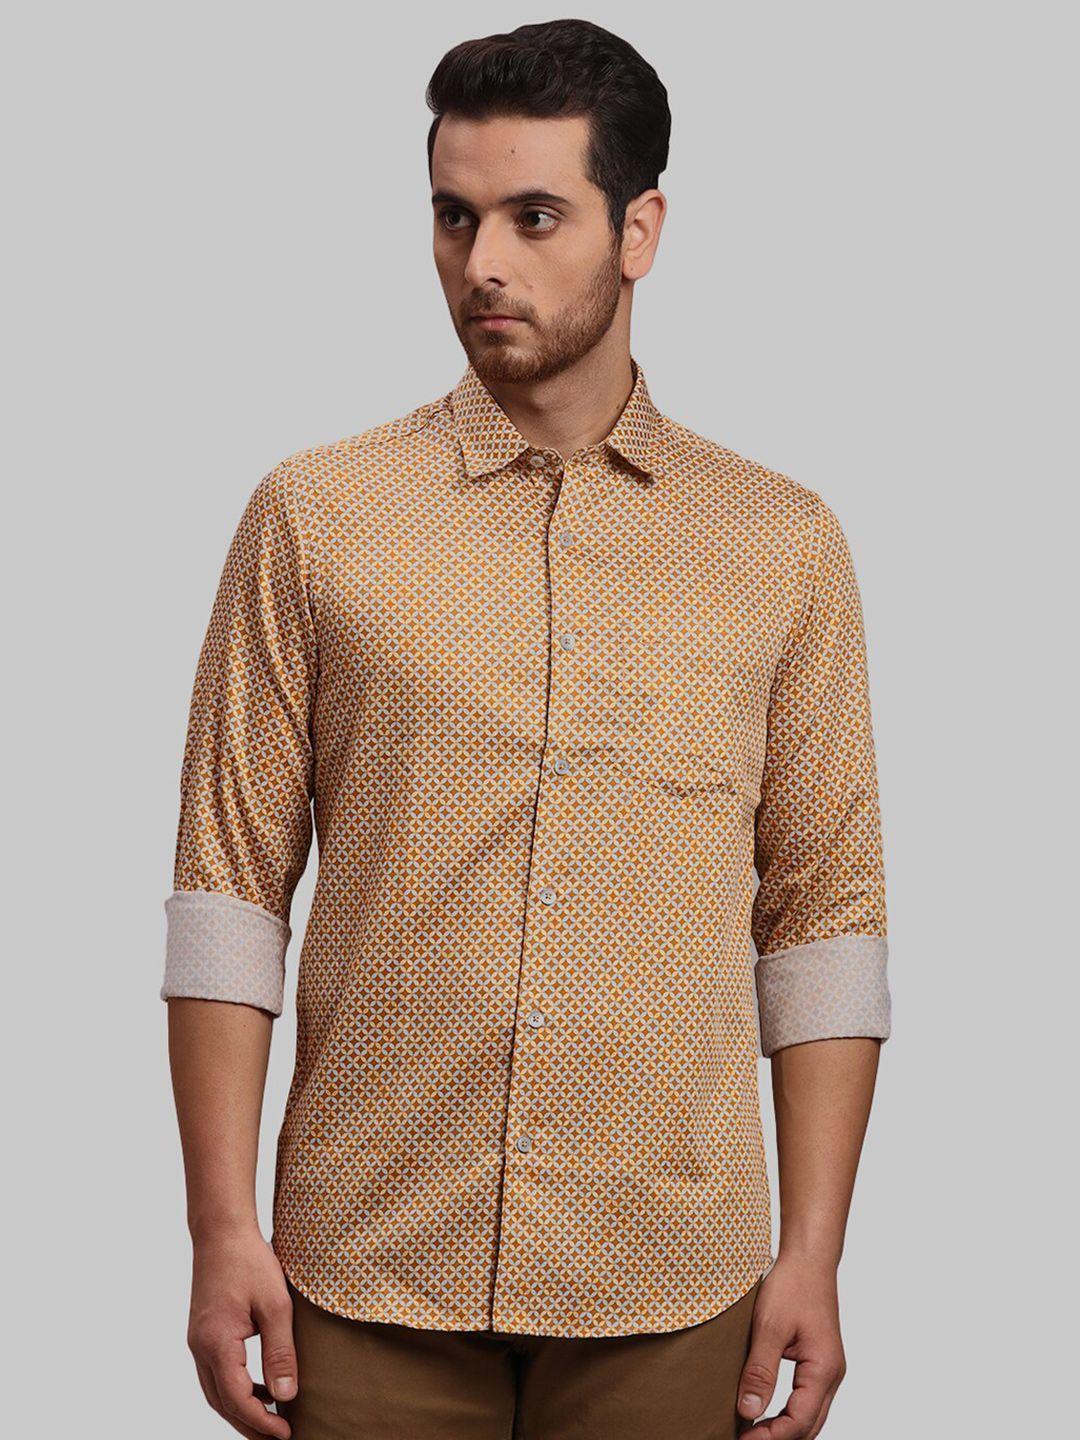 colorplus ethnic motifs printed cotton casual  shirt